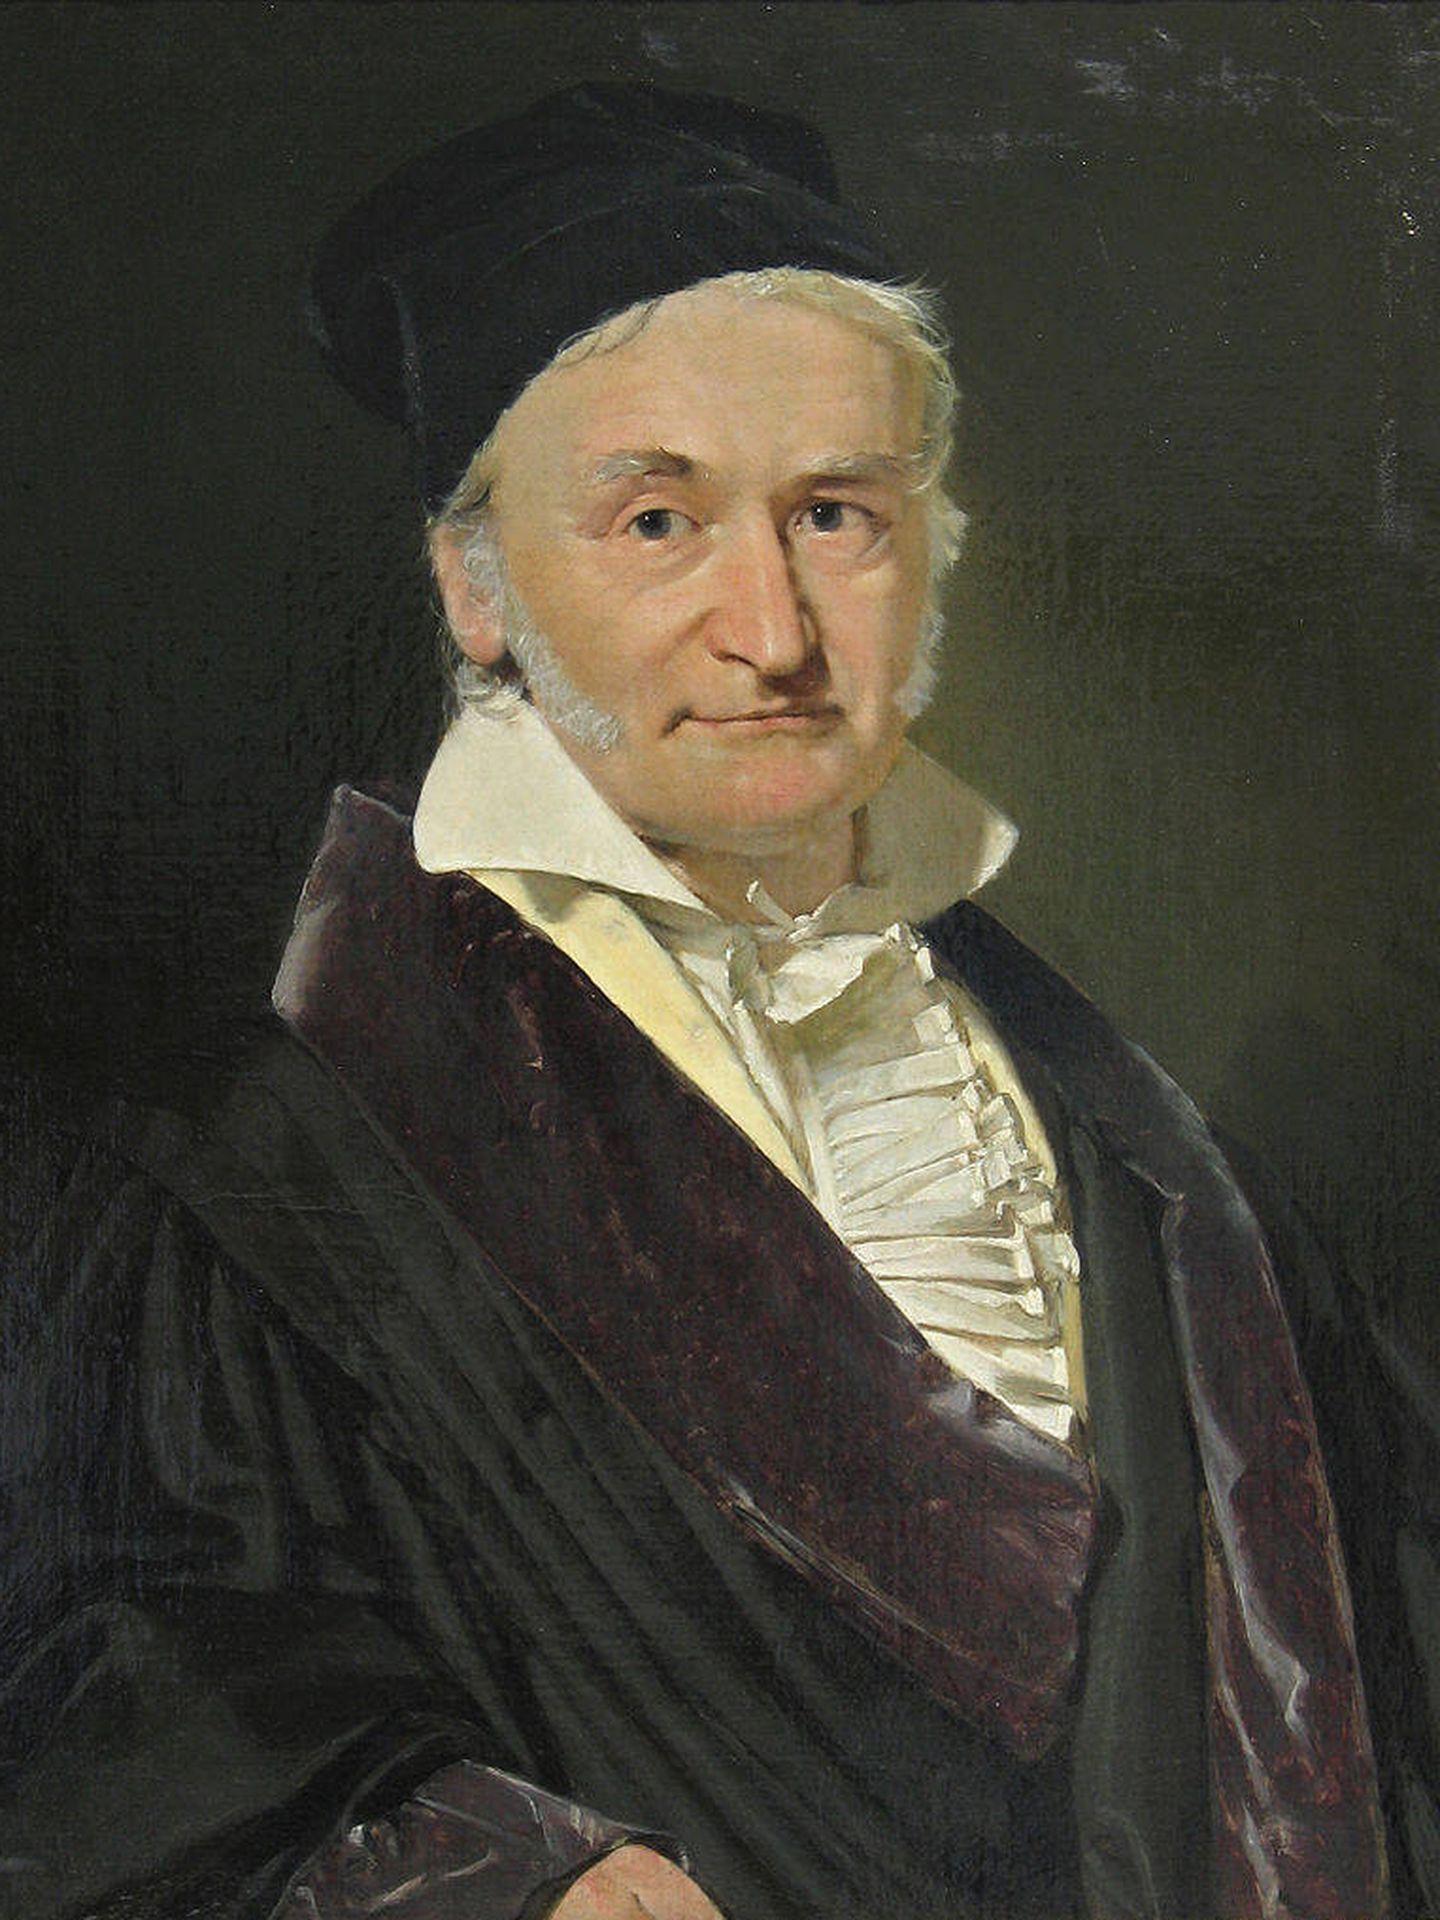 Retrato al óleo de Carl Friedrich Gauss, 1840. (Wikipedia)